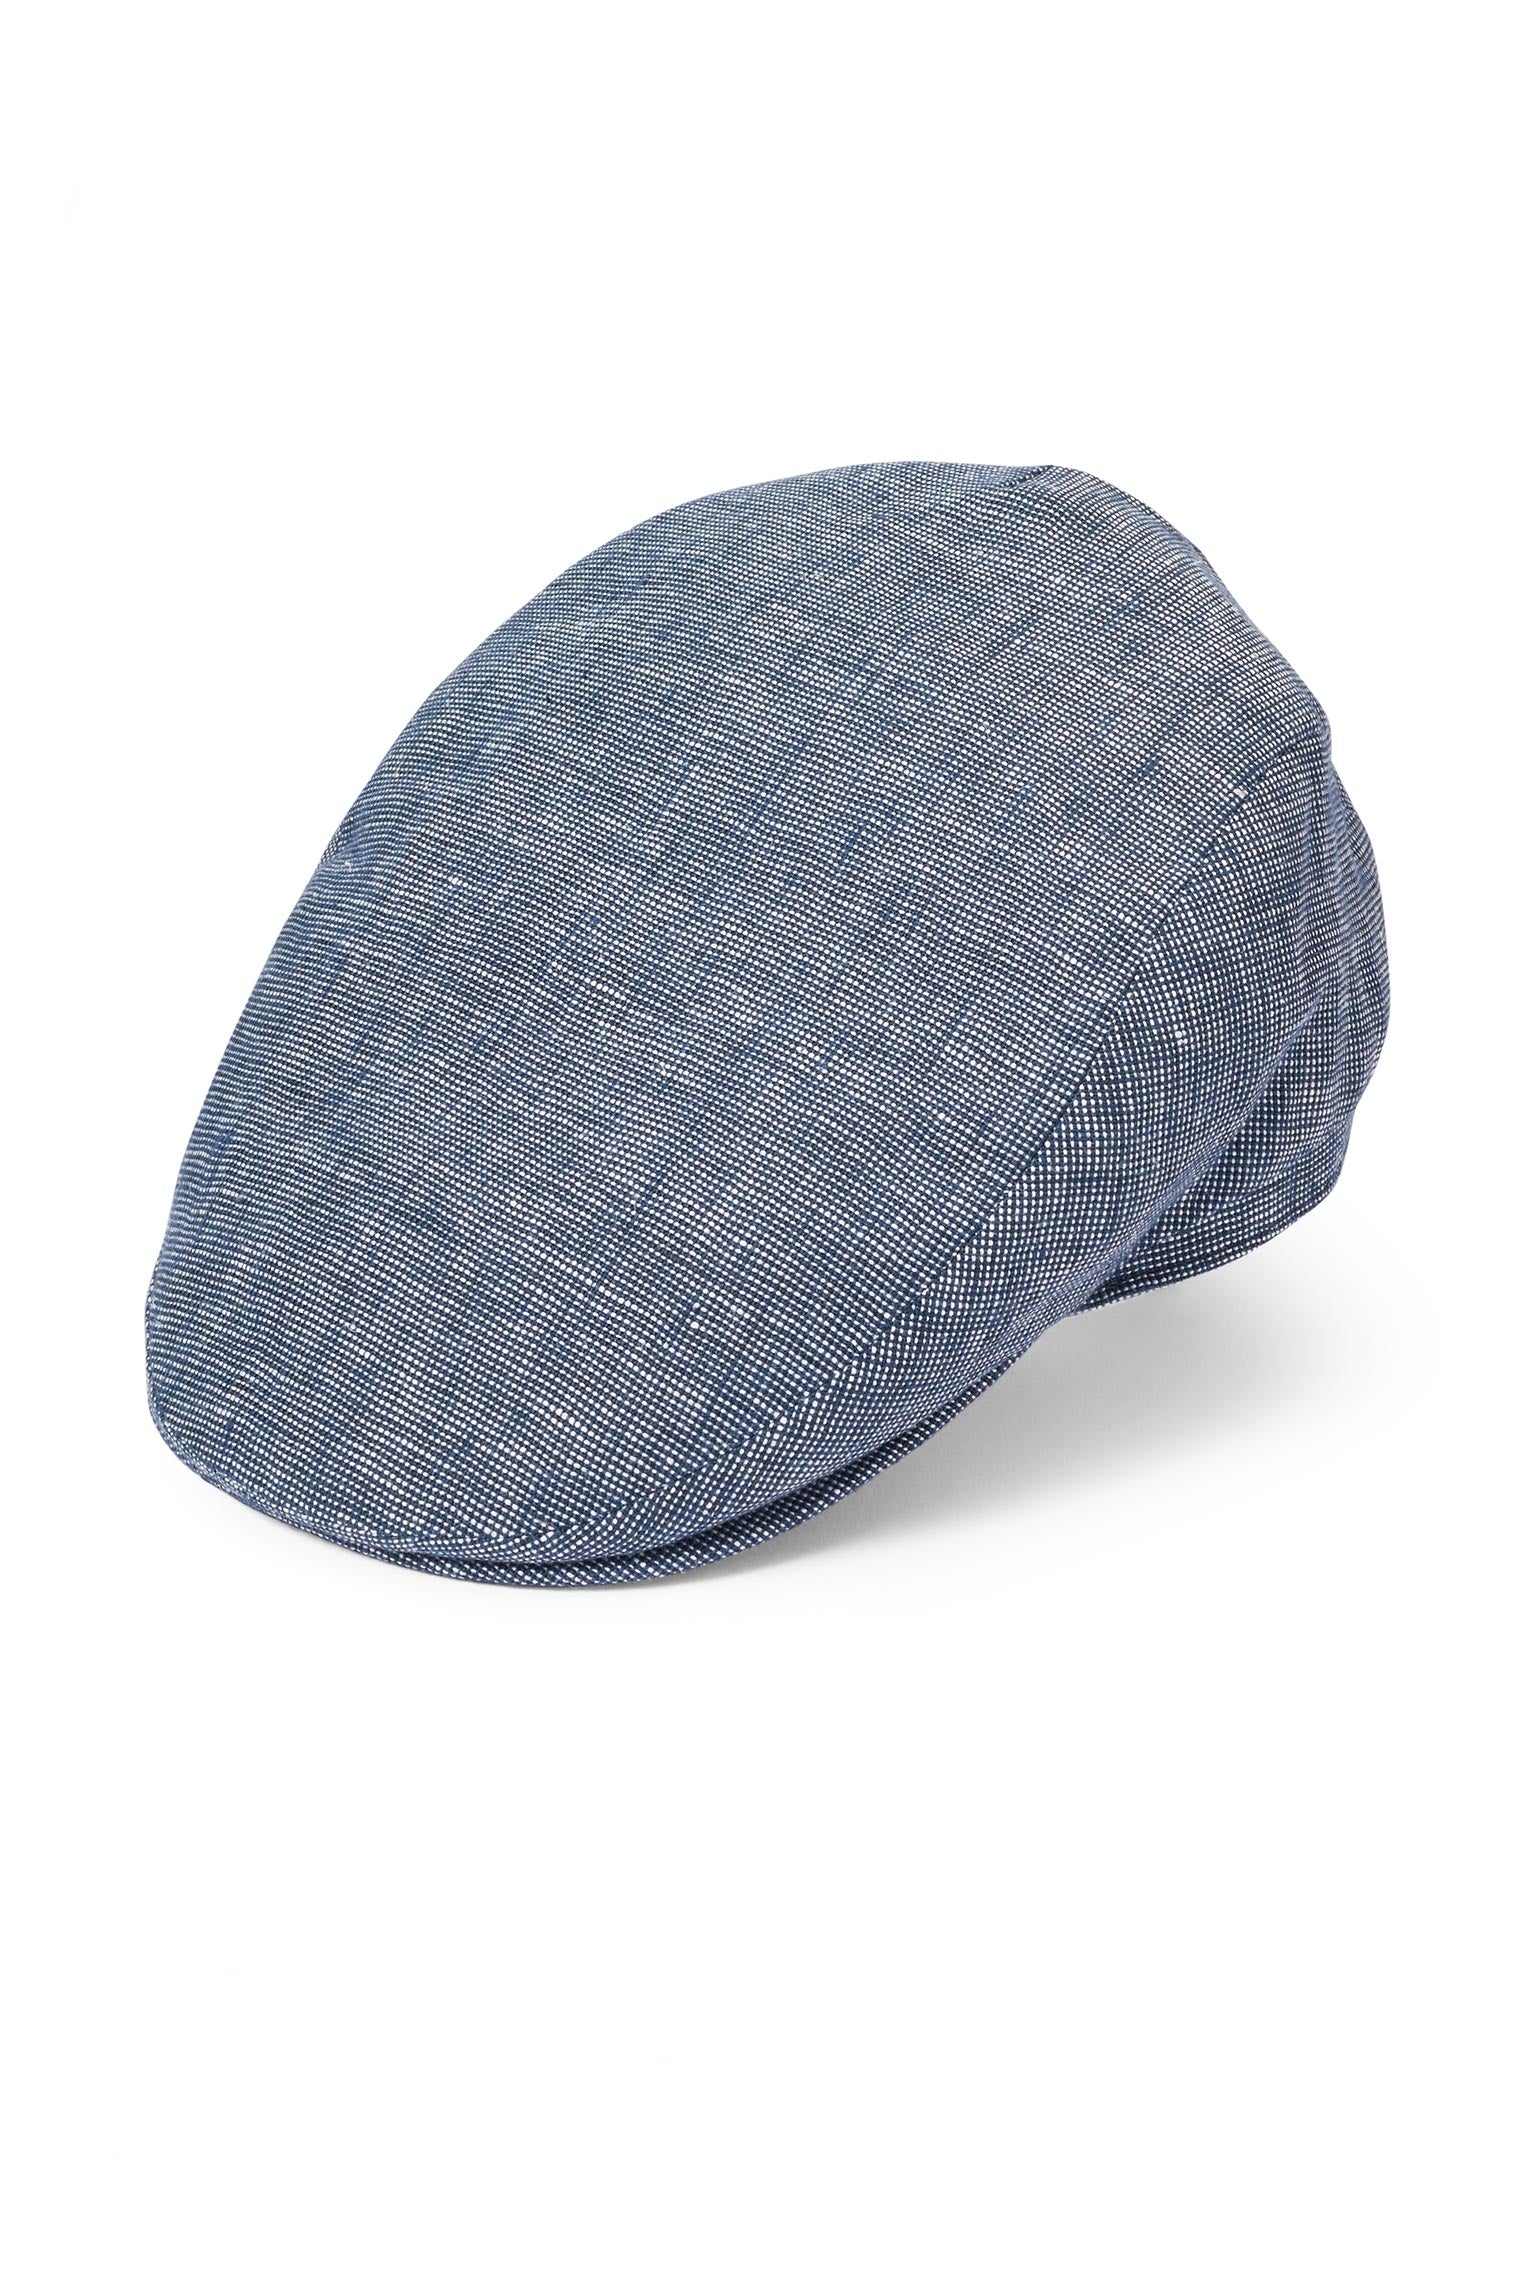 Summer Grosvenor Blue Flat Cap - New Season Hat Collection - Lock & Co. Hatters London UK